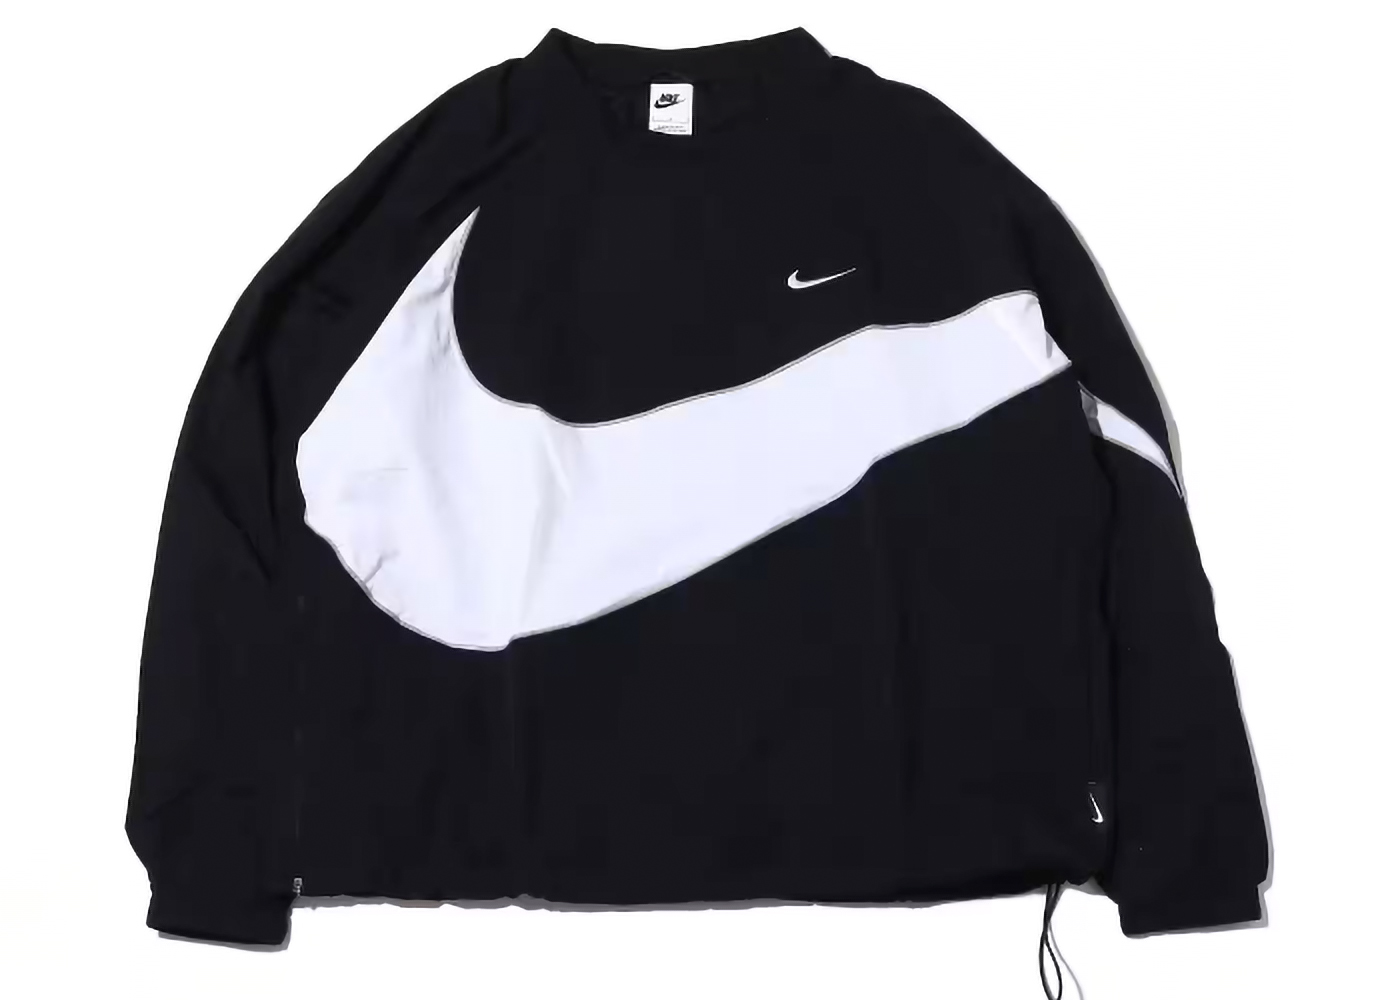 Nike Sportswear Big Swoosh Woven Jacket (Asia Sizing) Black/White